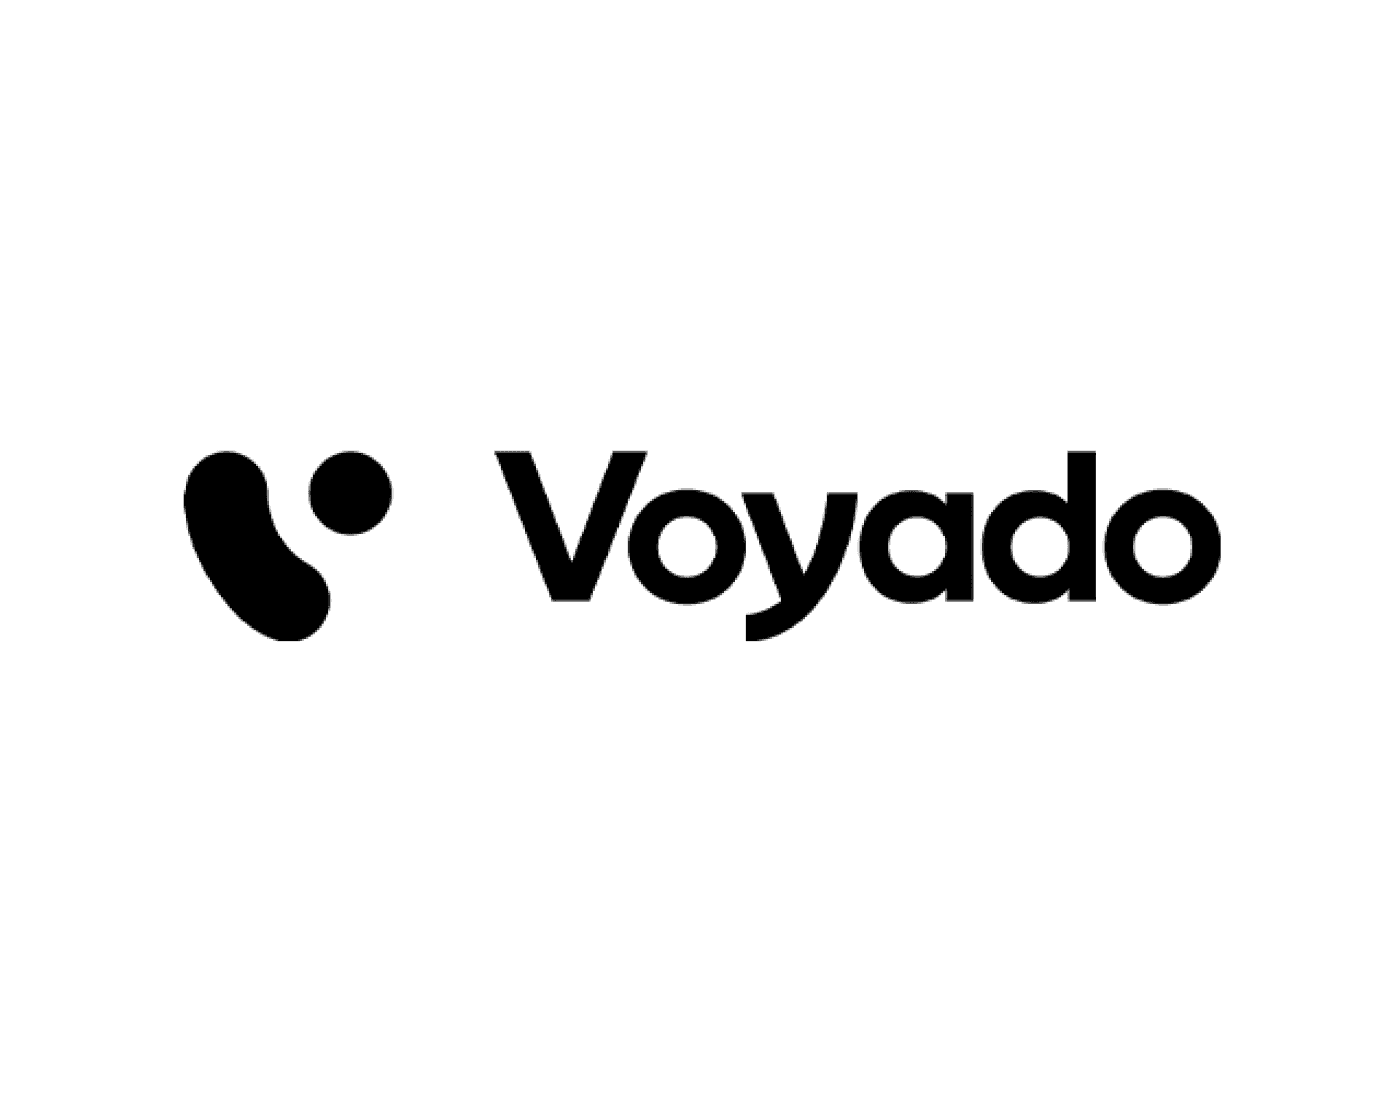 voyado-640x500-01.png